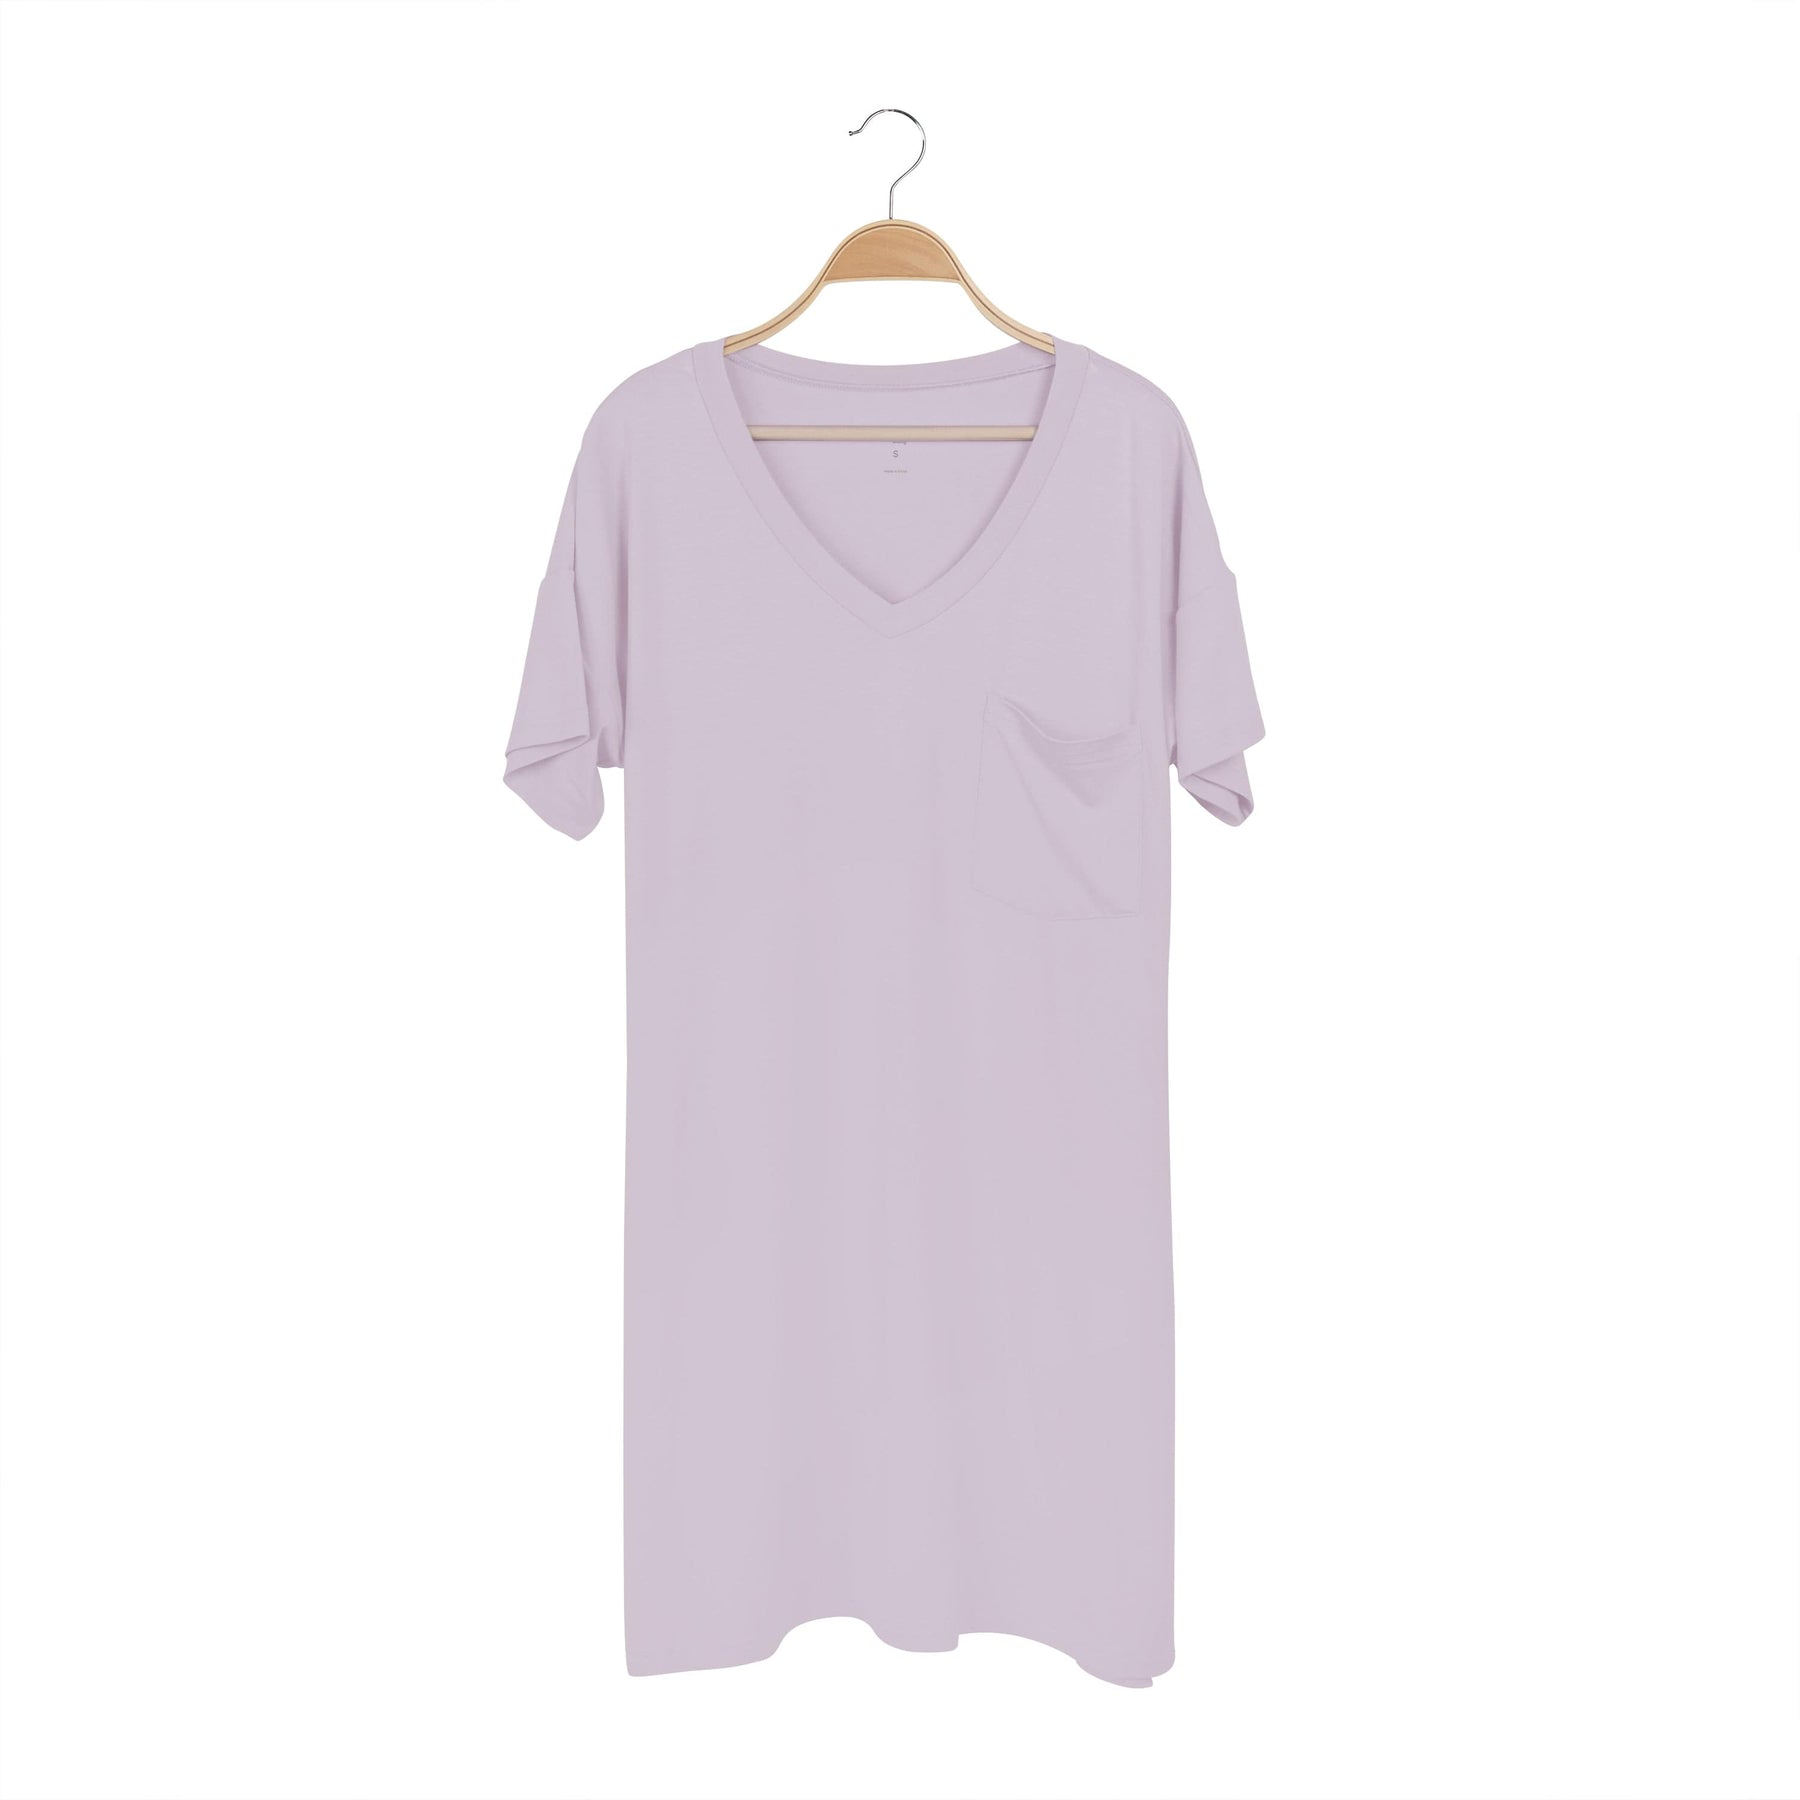 Kyte Baby Adult T-Shirt Dress Women's T-Shirt Dress in Wisteria